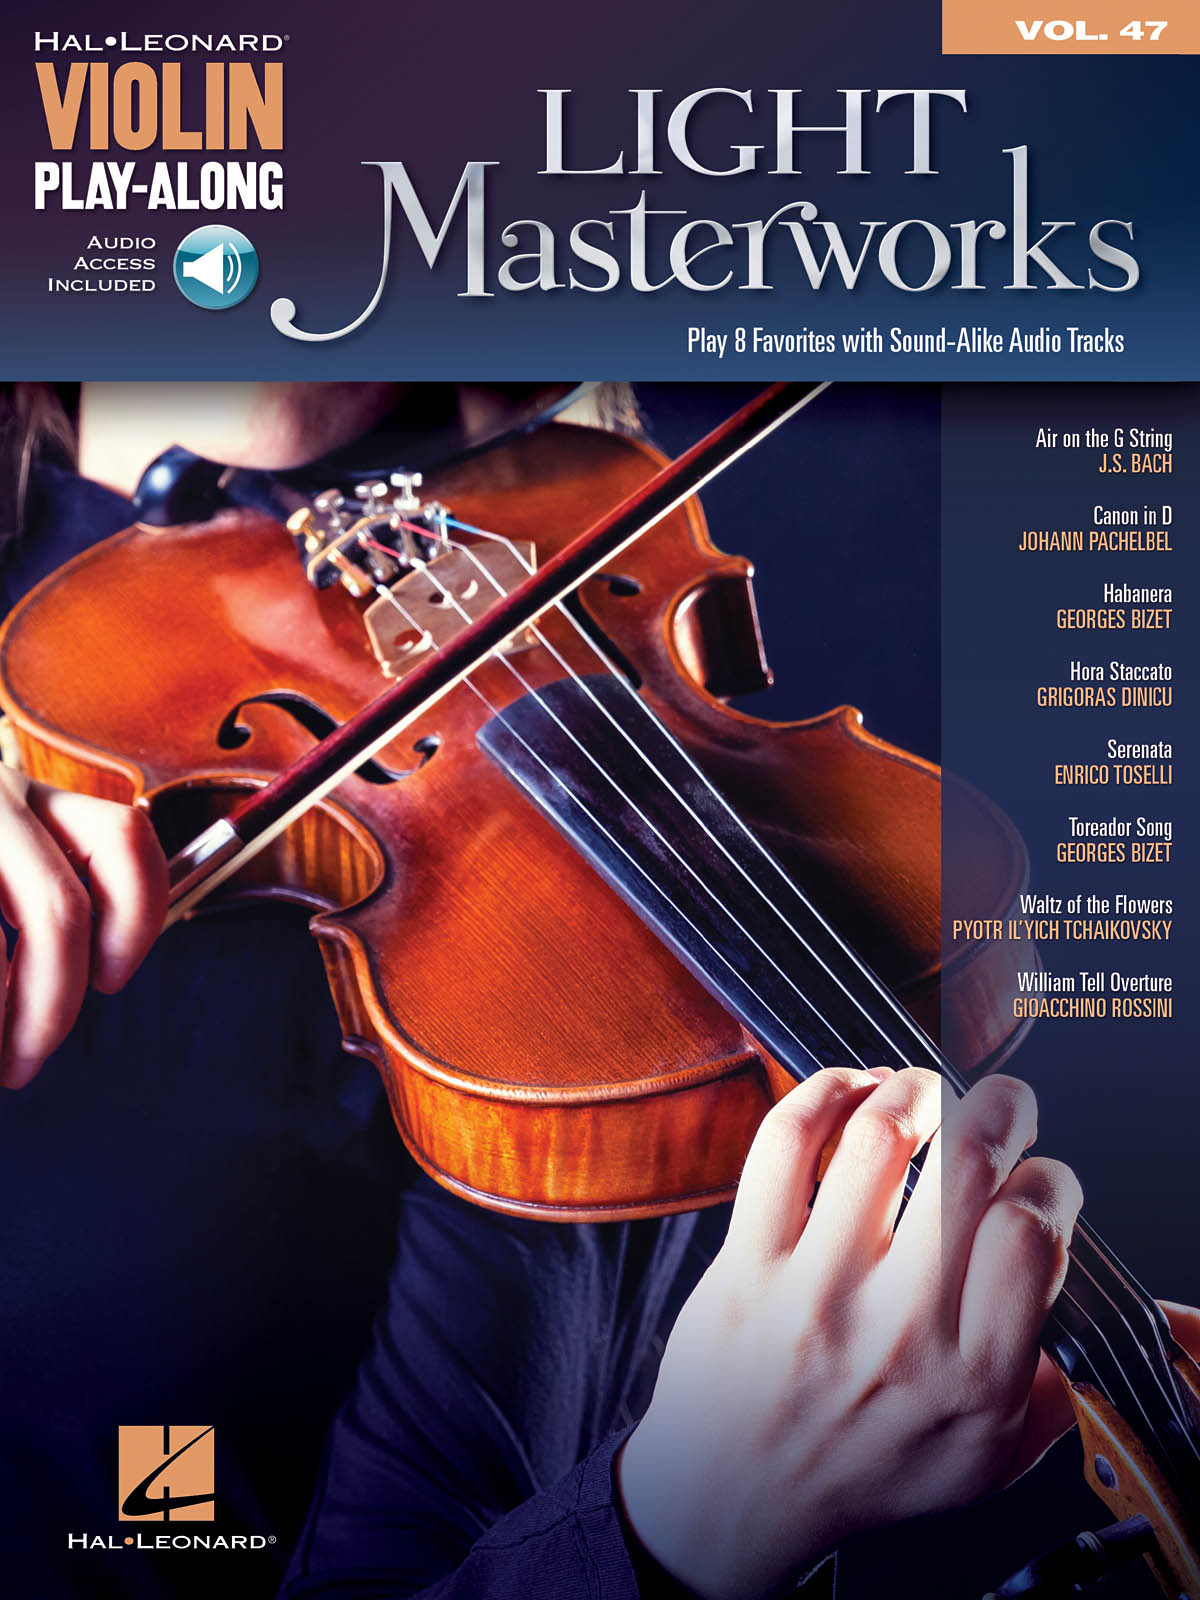 Violin Play-Along Volume 47:Light Masterworks